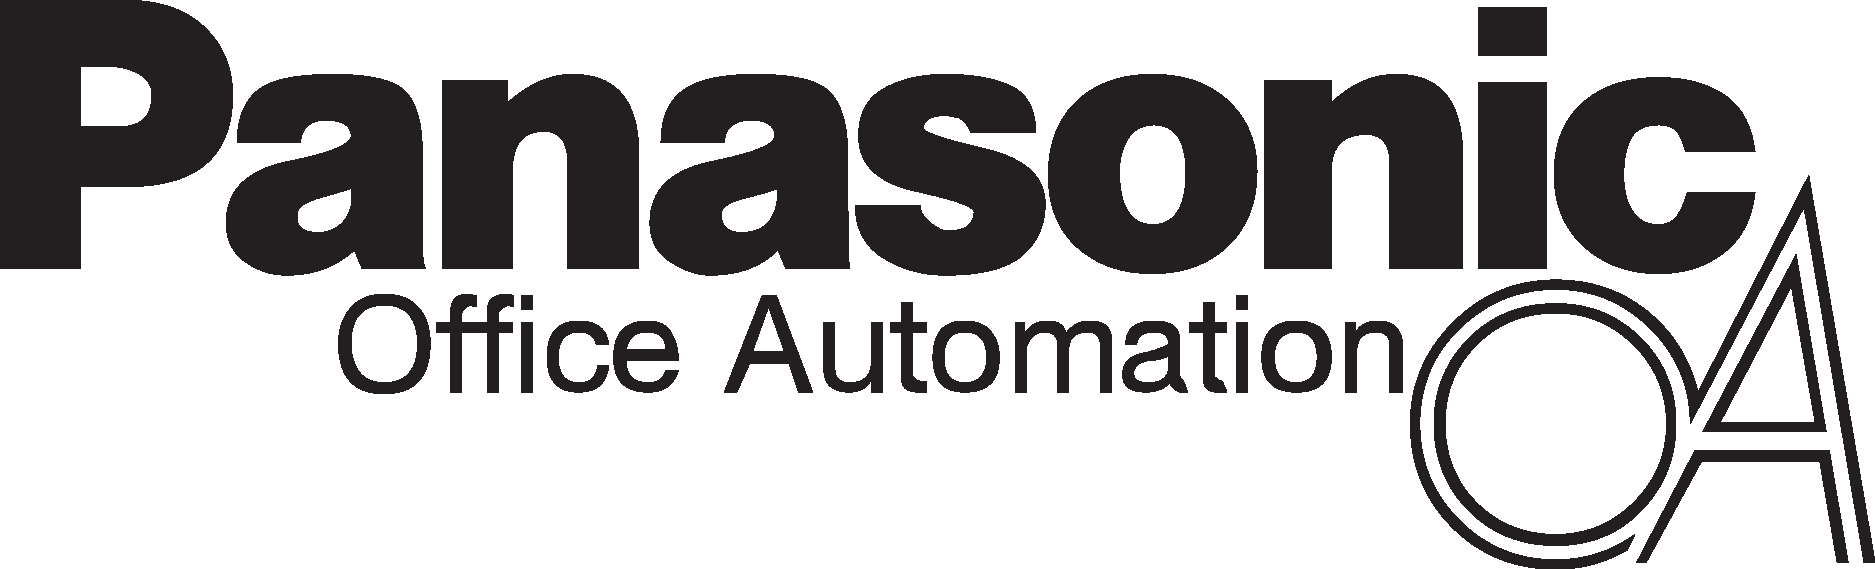 Panasonic Office Automation Logo Vector